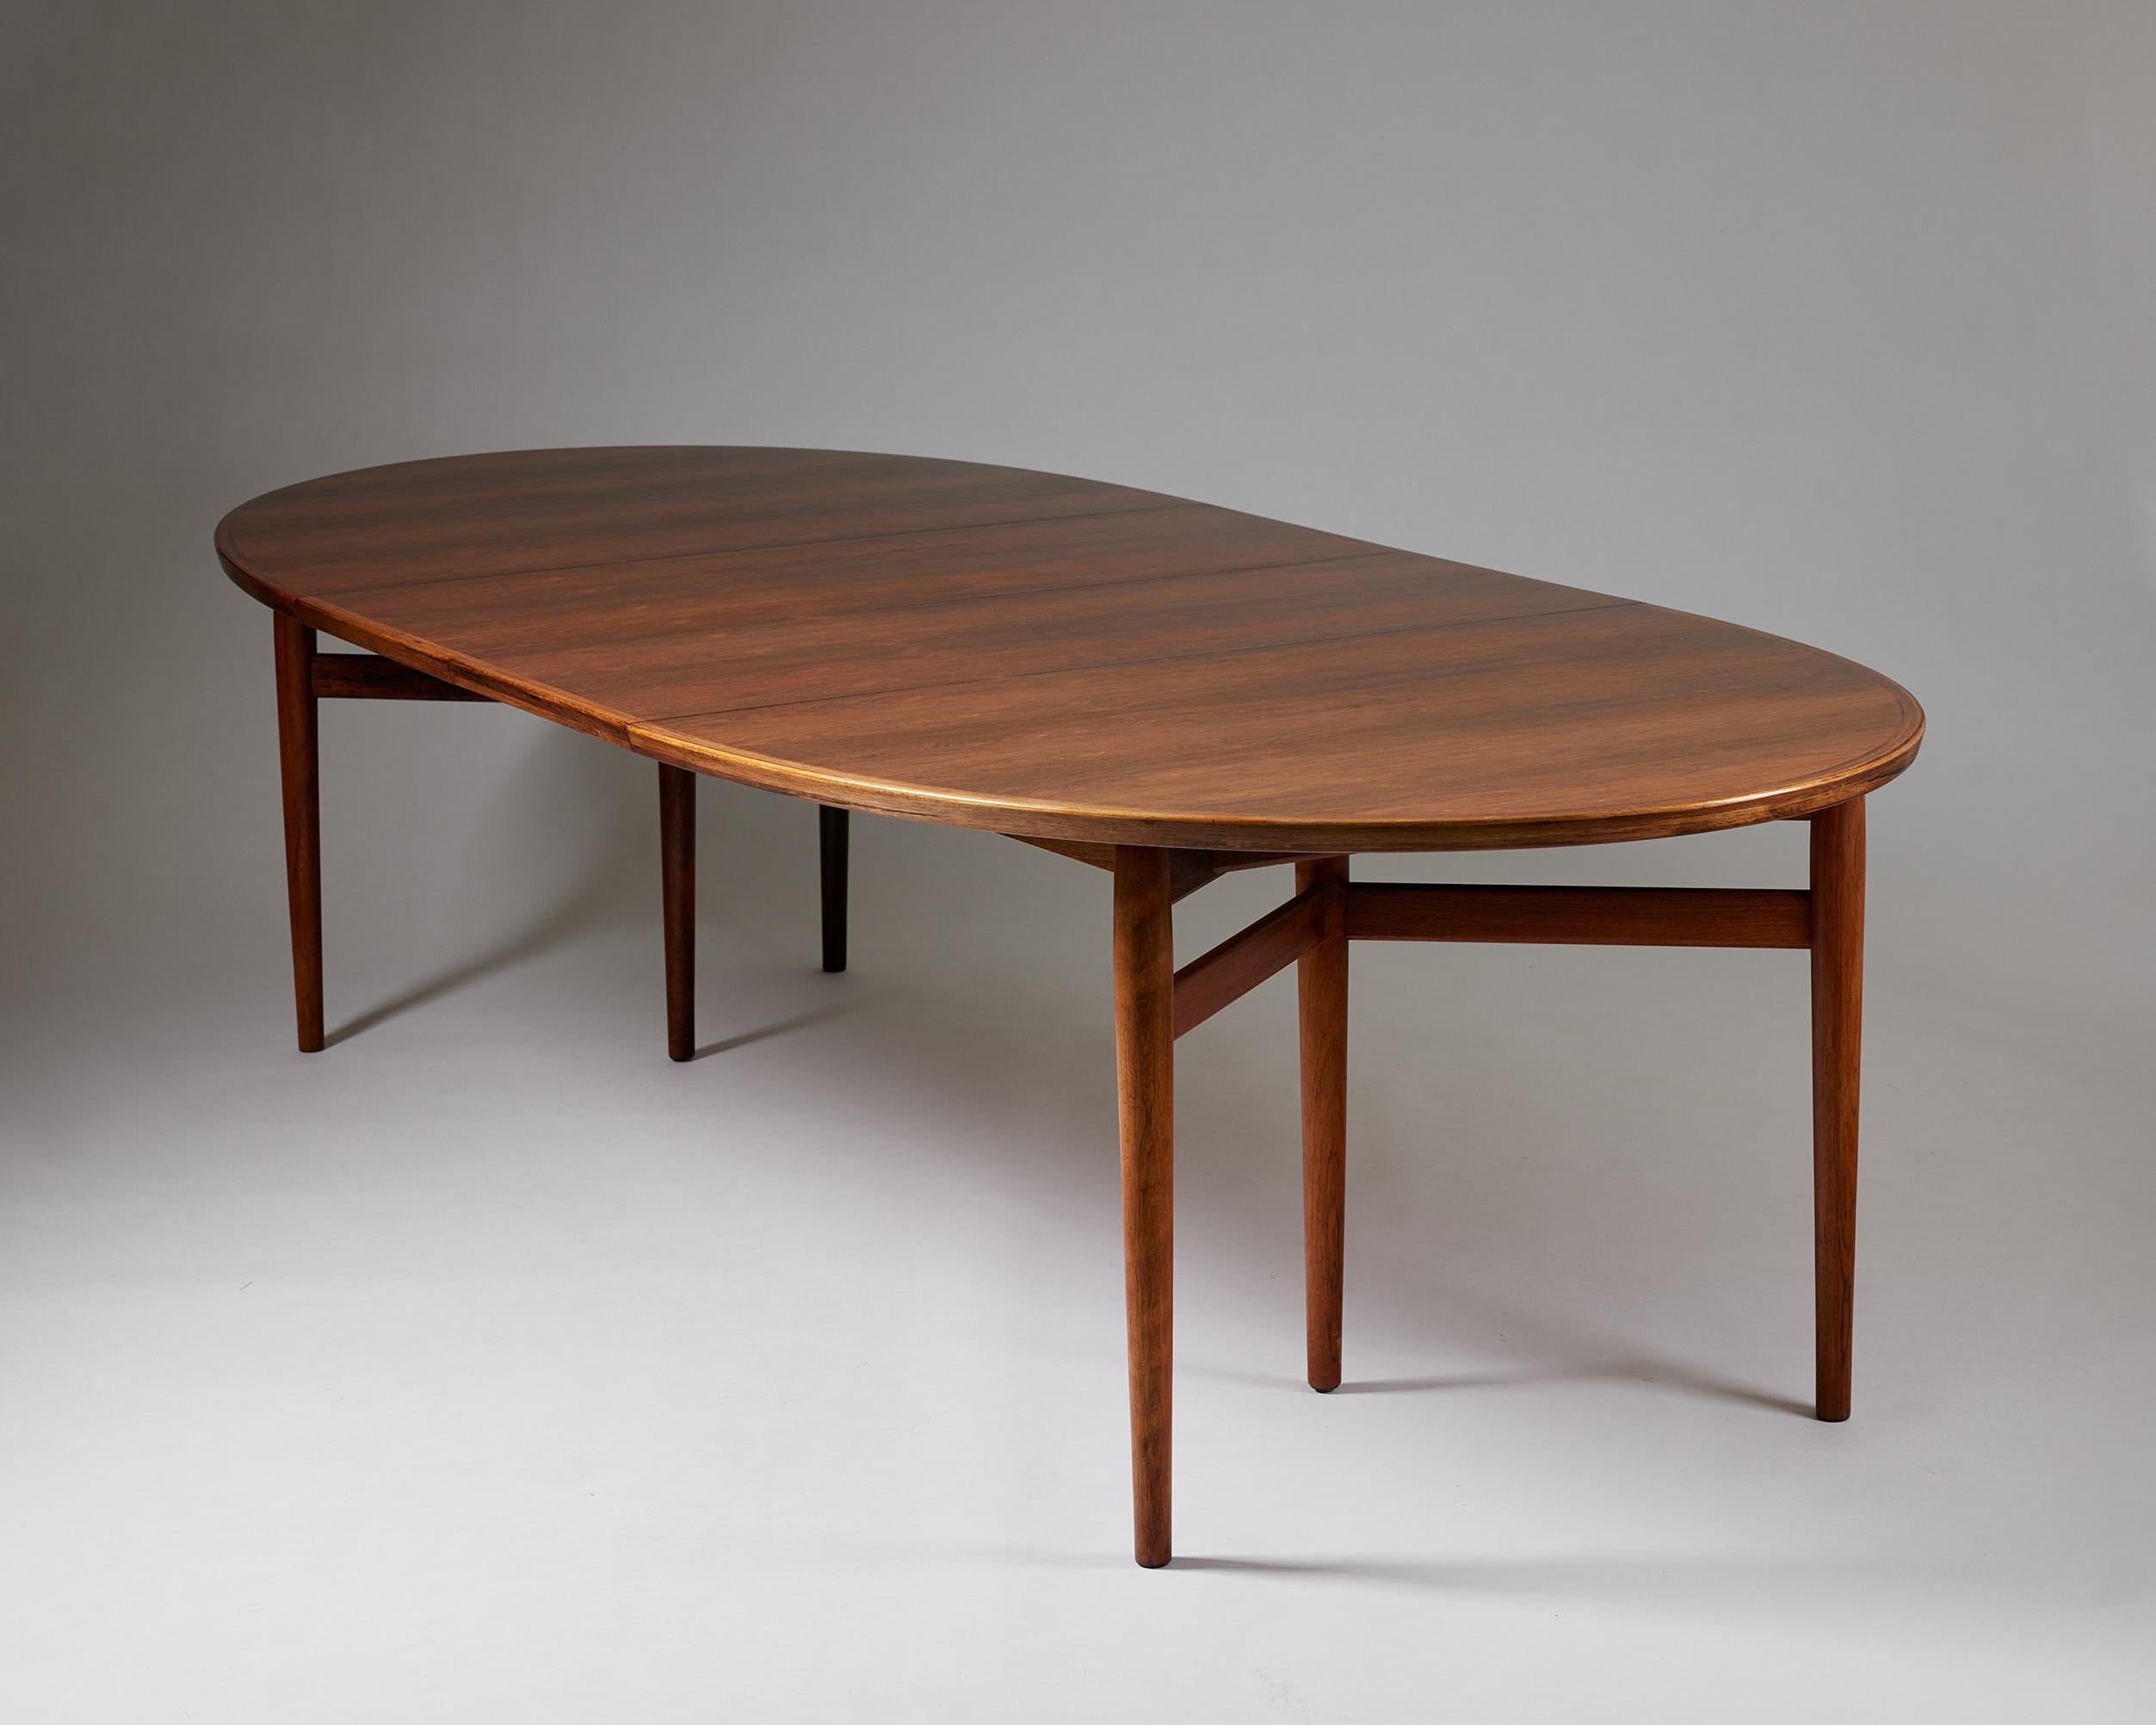 Dining table model 227 designed by Arne Vodder for Sibast,
Denmark, 1950s.

Rosewood.

Stamped.

H: 72 cm / 2' 4 1/4''
L: 198 cm / 6'6''
Length when fully extended: 298 cm / 9' 7 3/4''
Two extension leaves at 50 cm / 19 3/4'' each.
D: 106 cm / 41